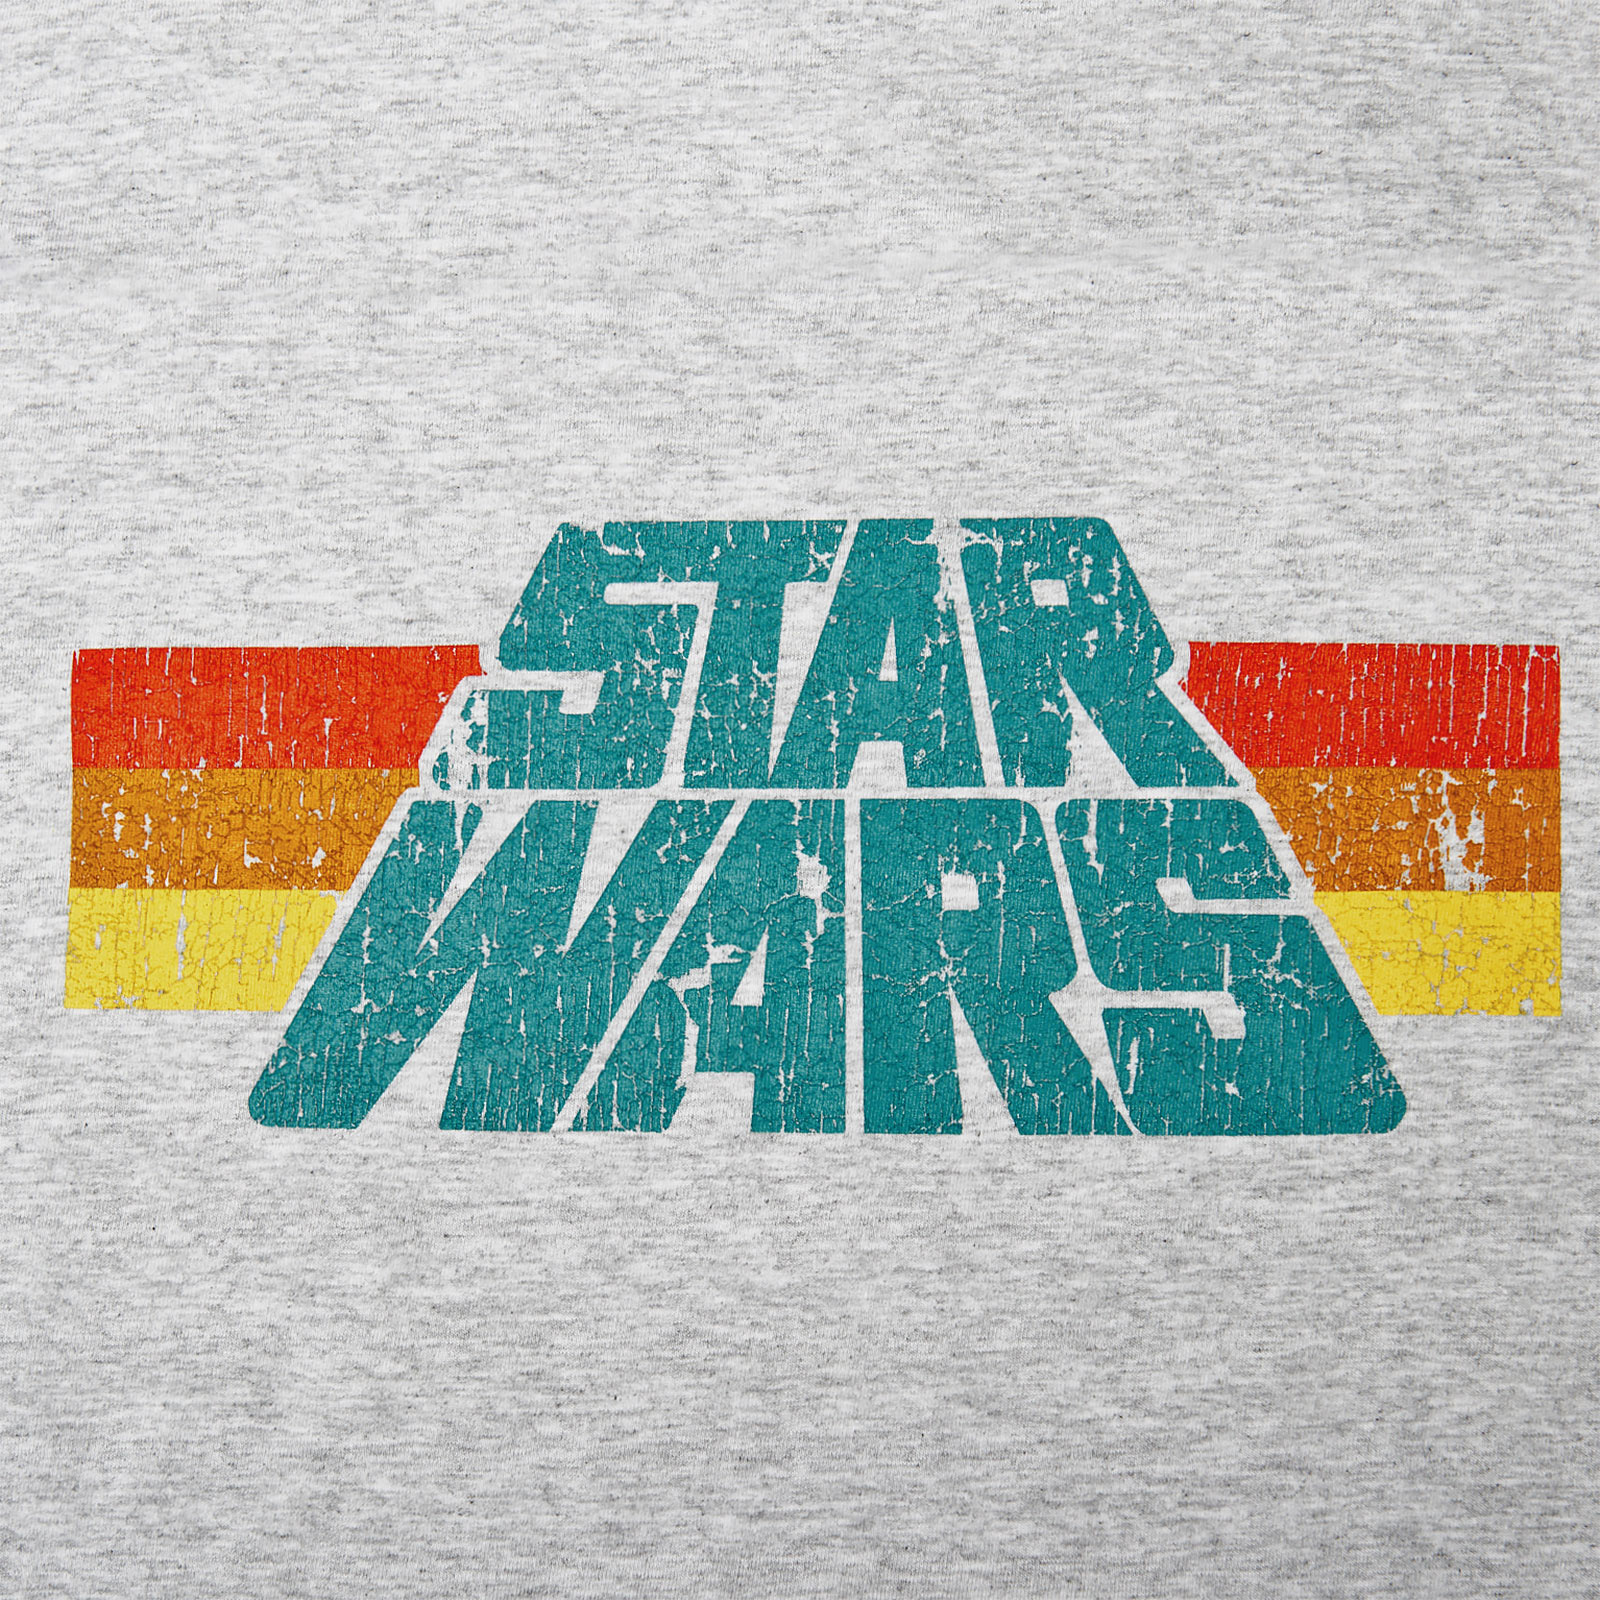 Star Wars - Vintage 77 Logo T-Shirt Grey